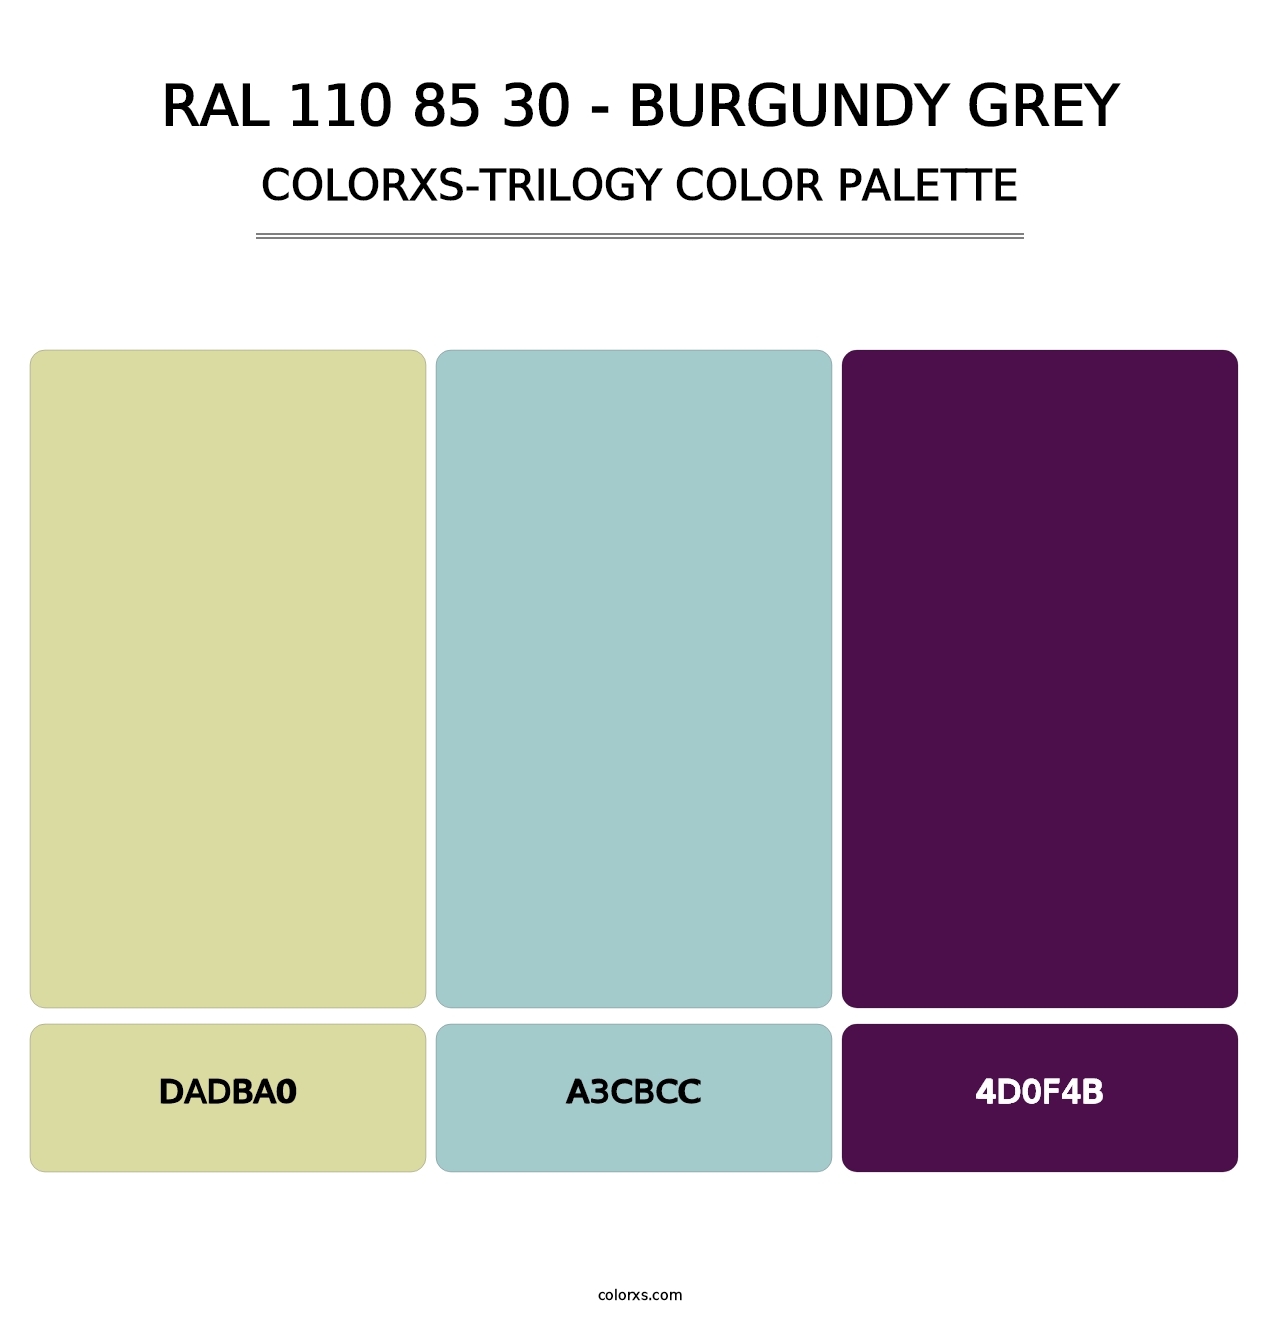 RAL 110 85 30 - Burgundy Grey - Colorxs Trilogy Palette